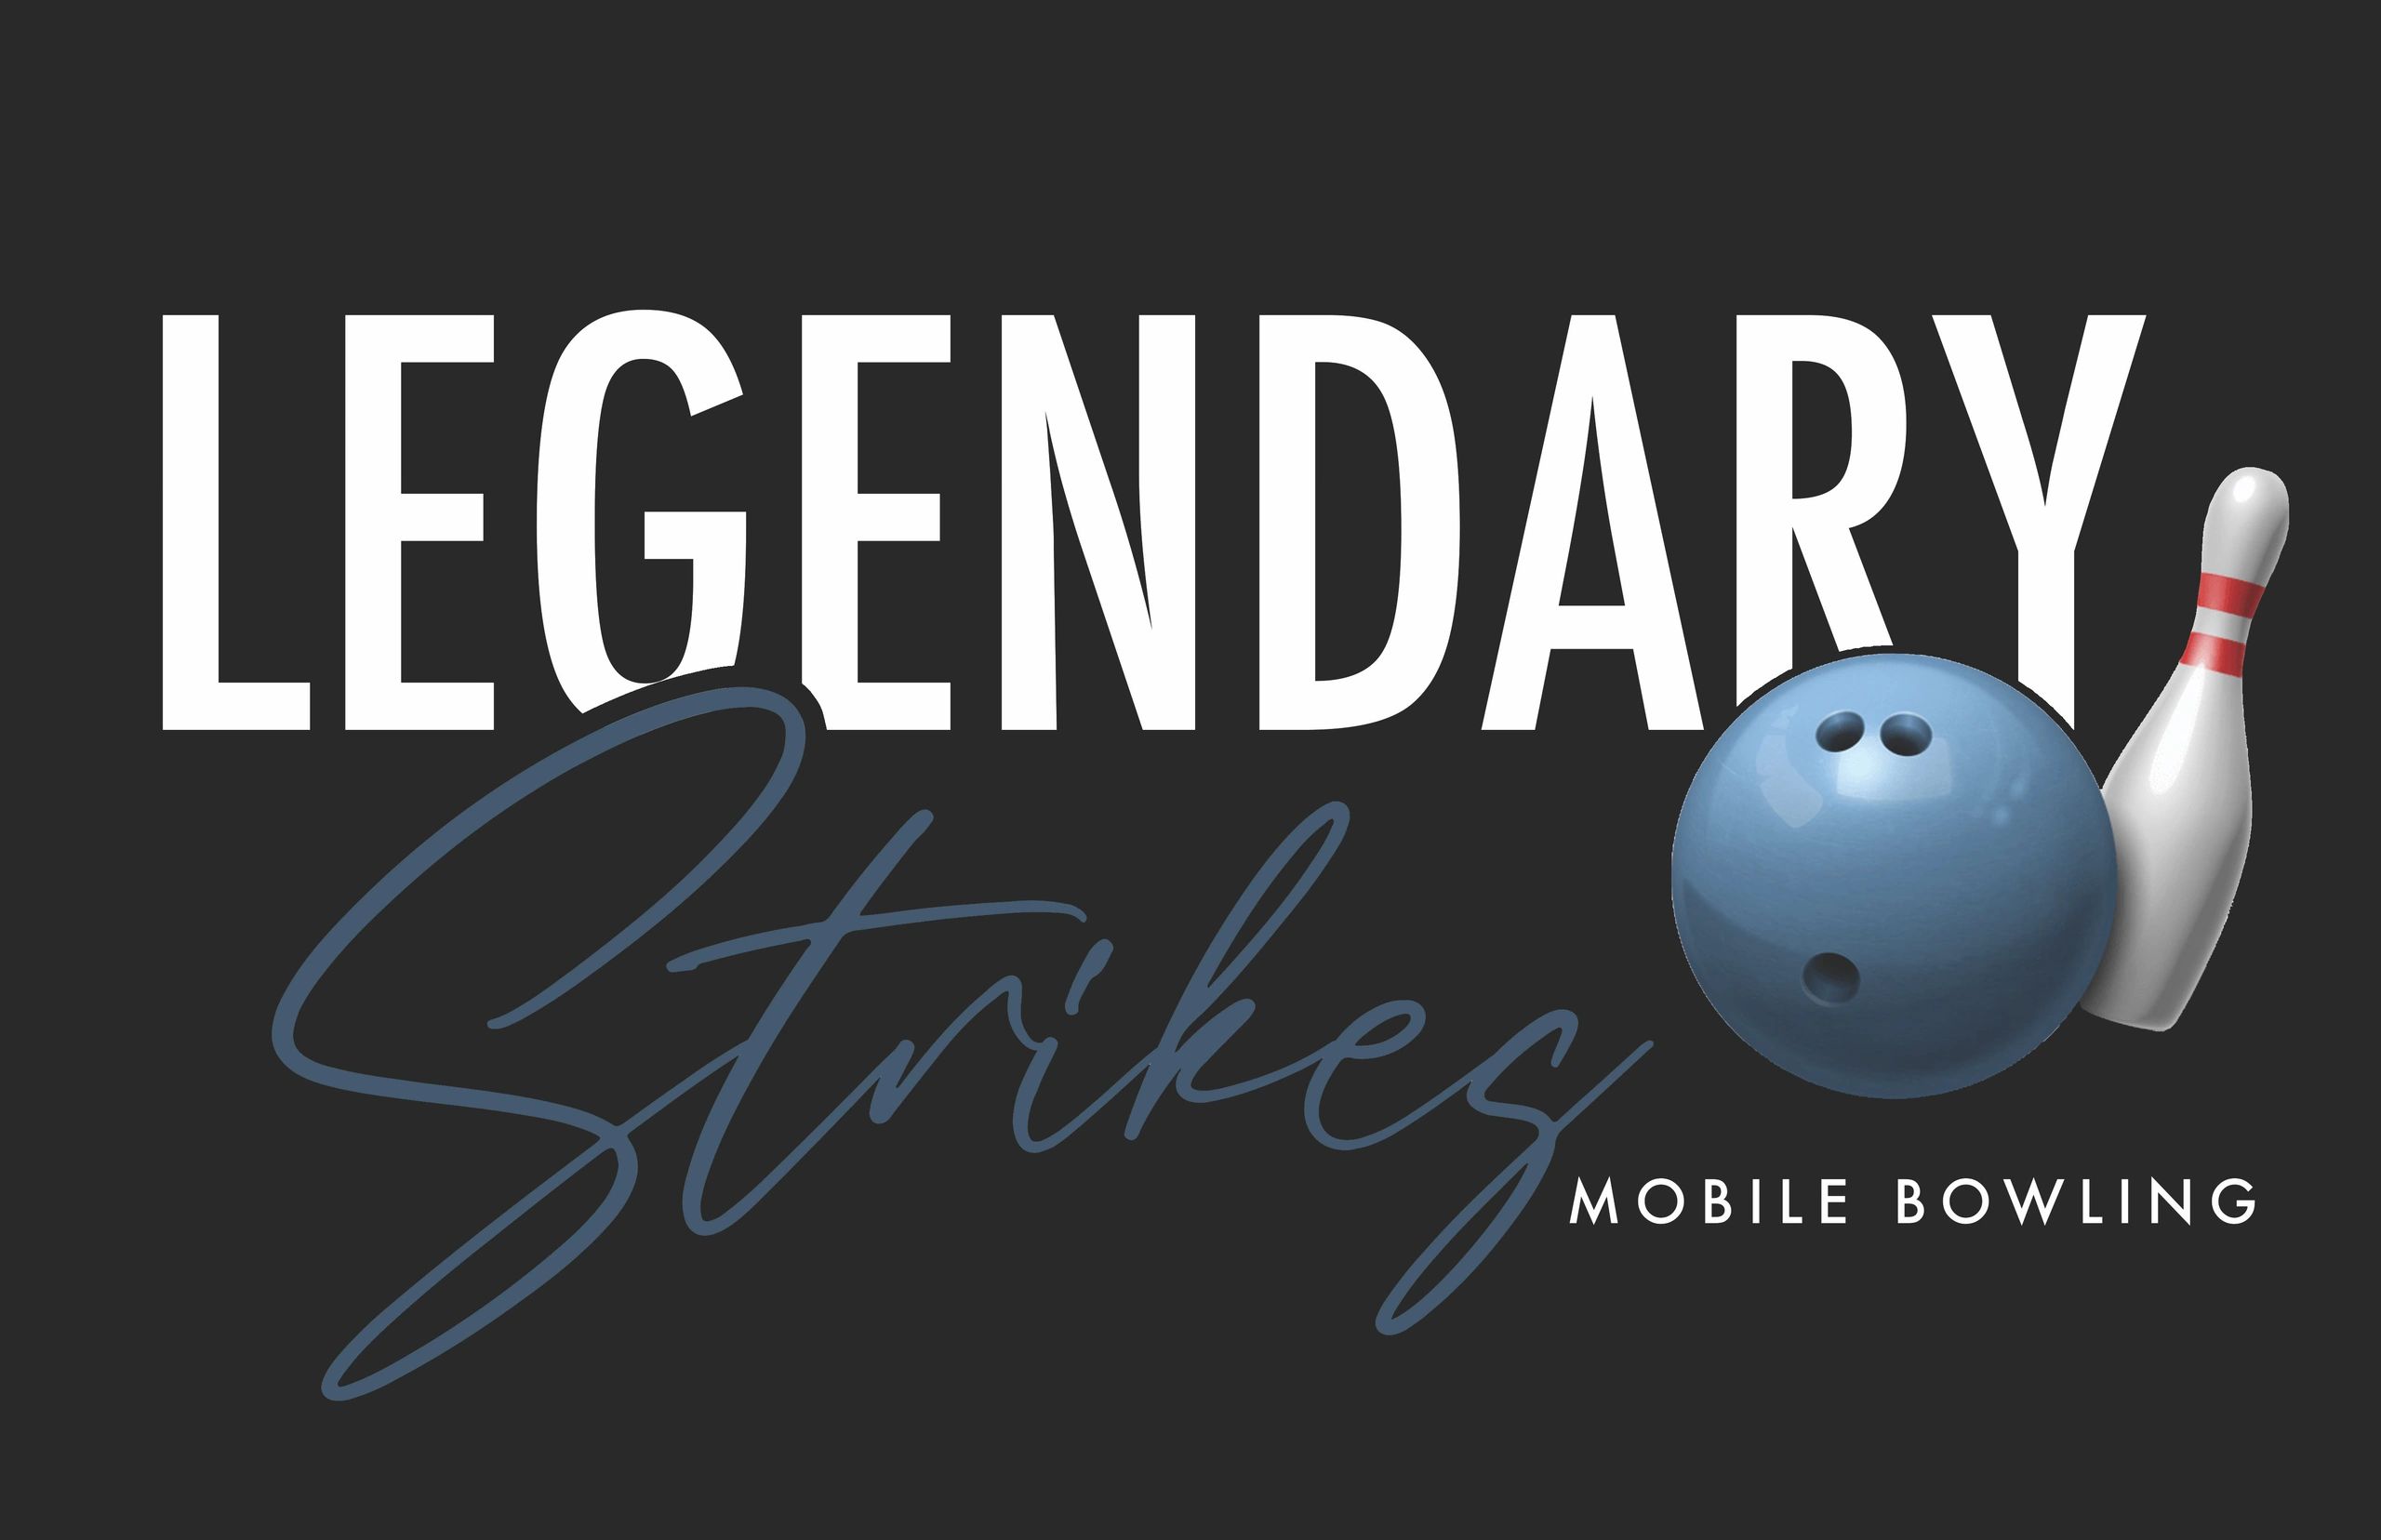 LEGENDARY STRIKES MOBILE BOWLING - Luxury Strike LLC Trademark Registration